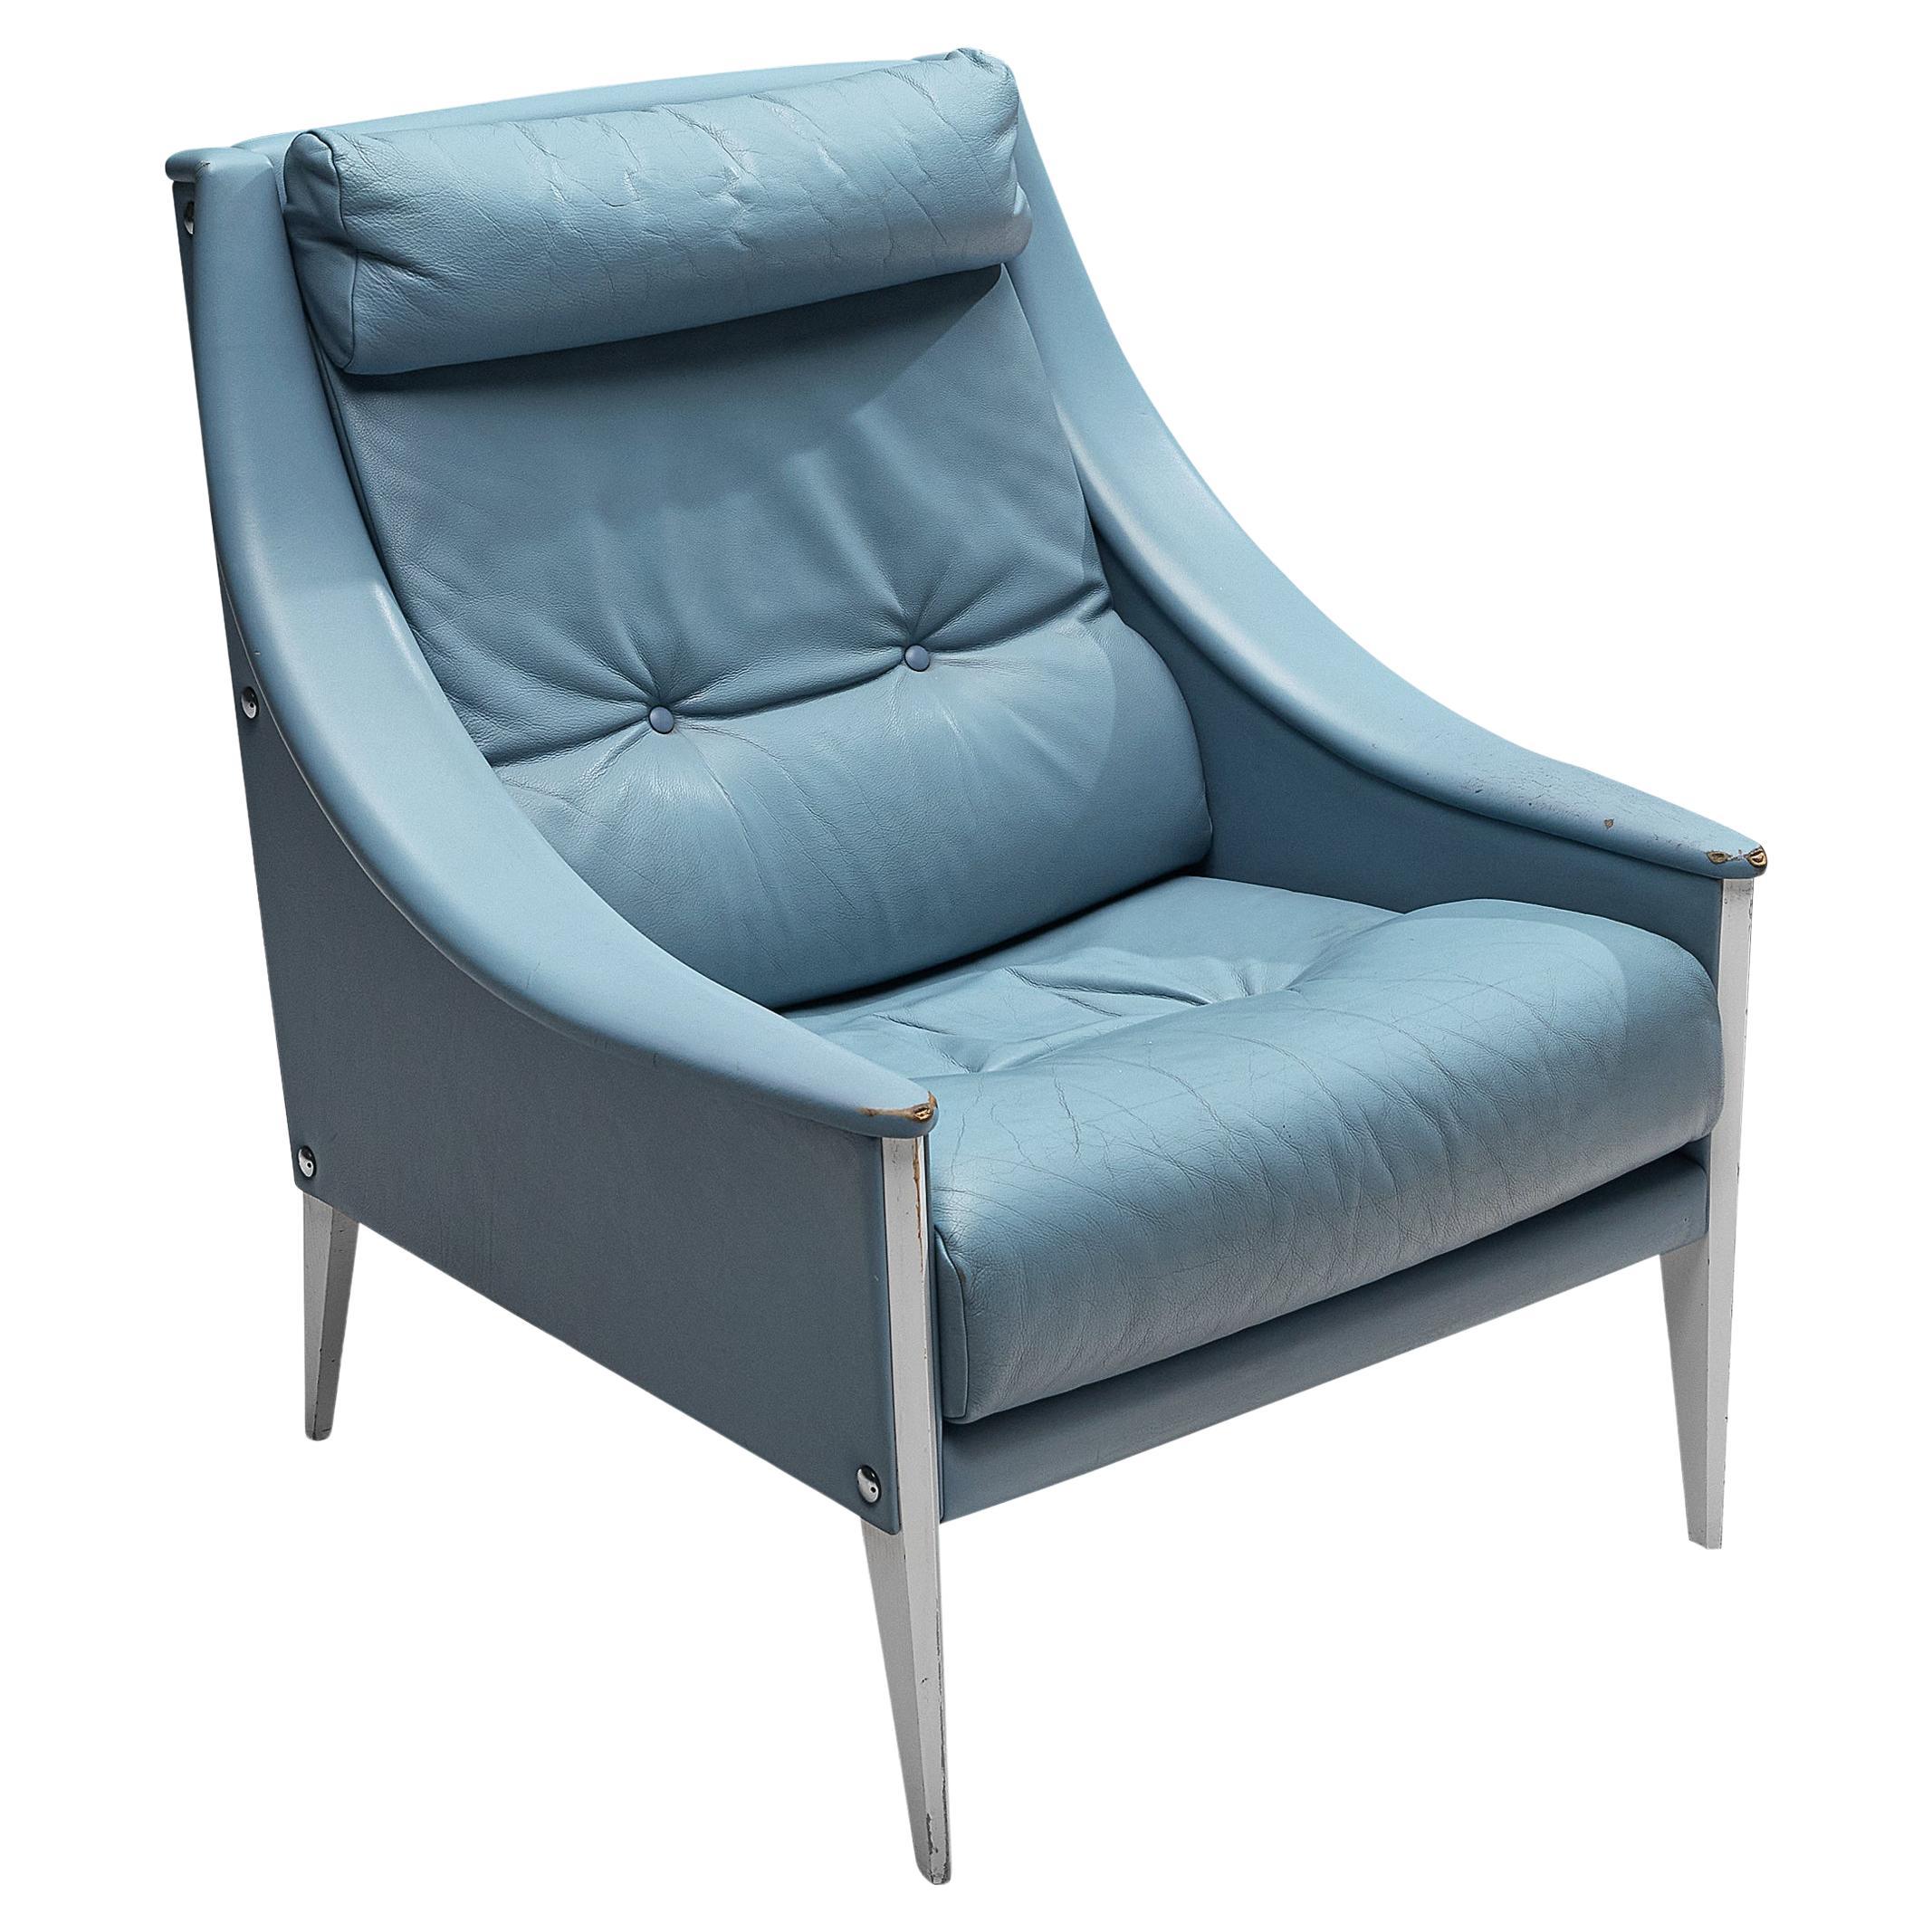 Gio Ponti fauteuil de salon 'Dezza' en cuir bleu clair pour Poltrona Frau